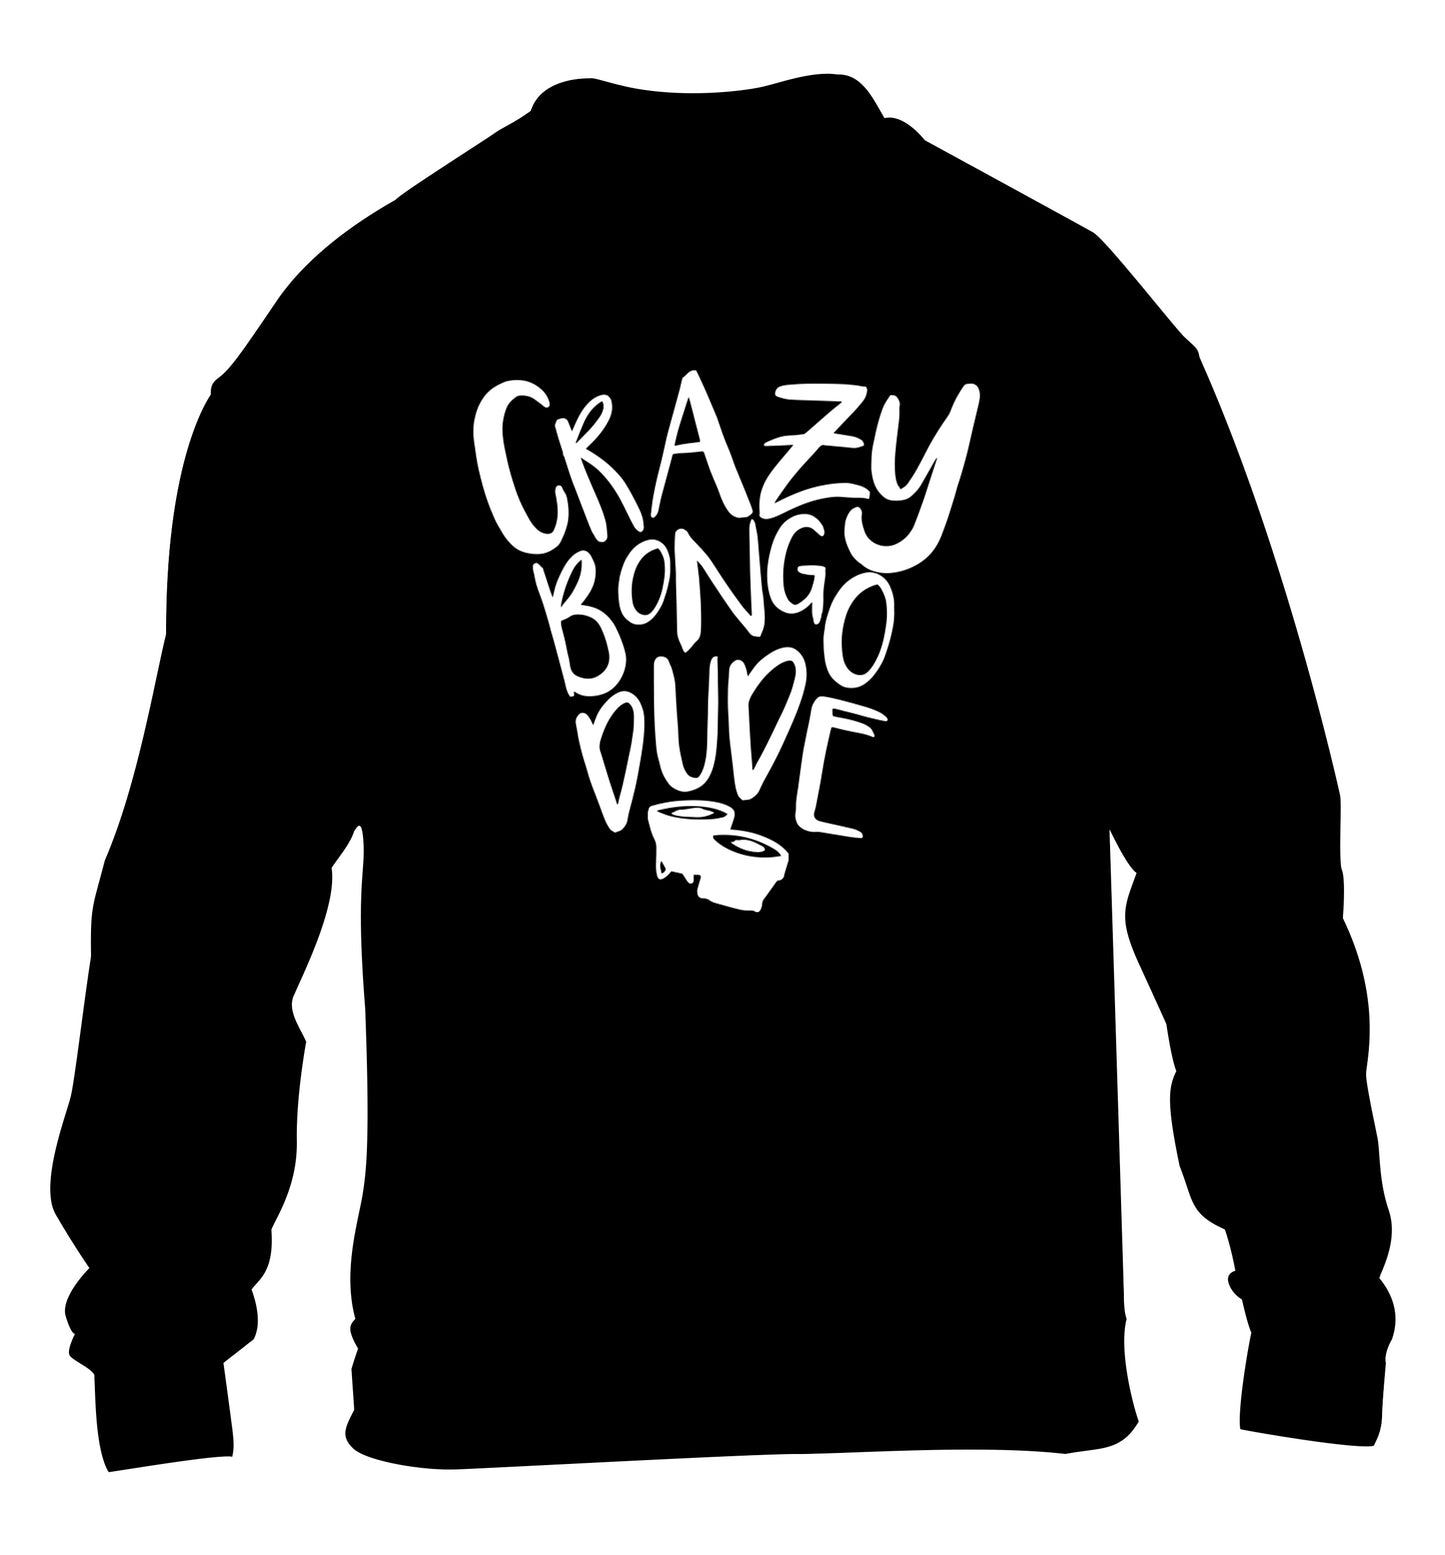 Crazy bongo dude children's black sweater 12-14 Years